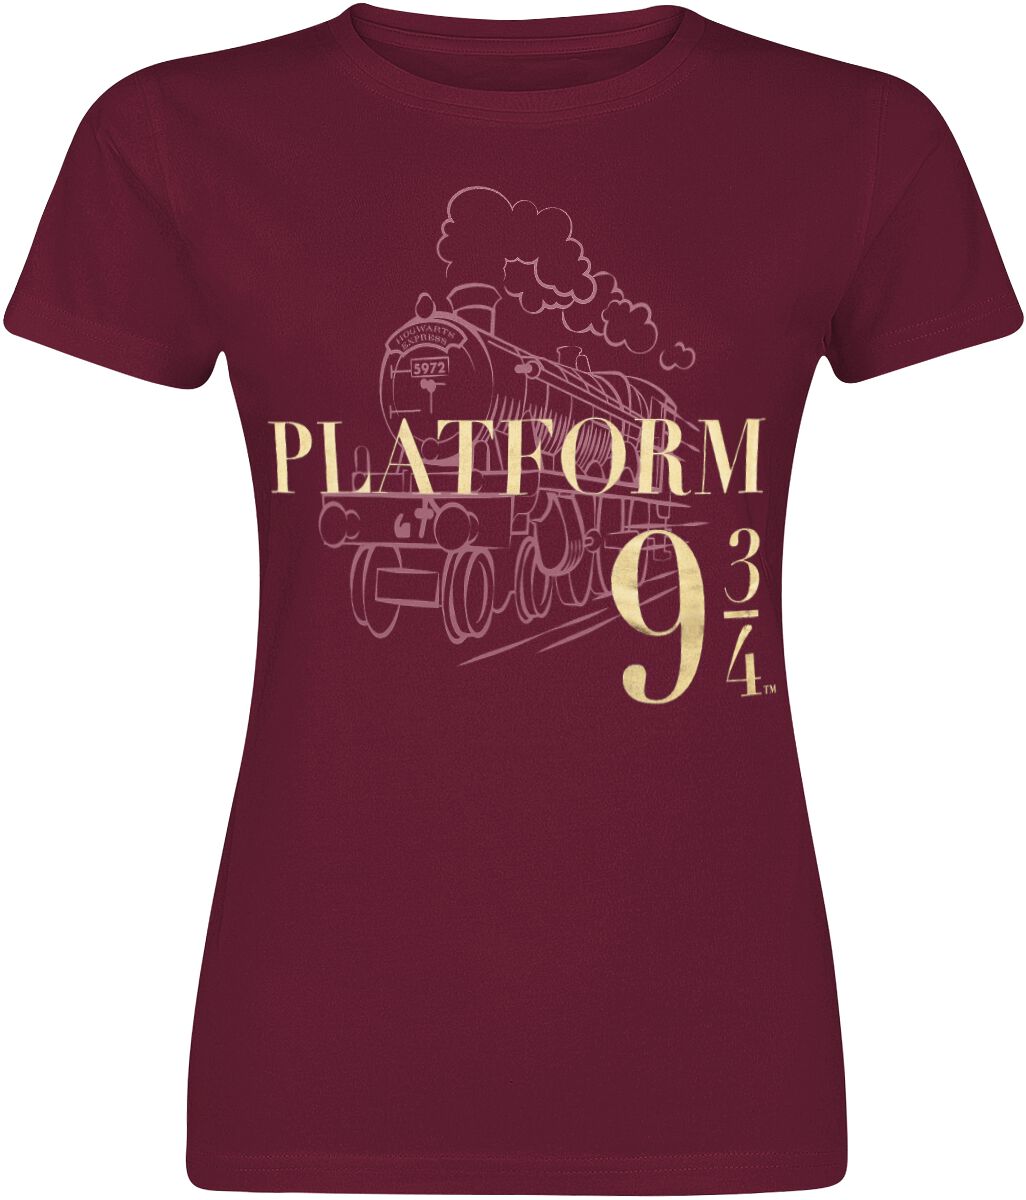 Image of T-Shirt di Harry Potter - Platform 9 3/4 - S a M - Donna - rosso